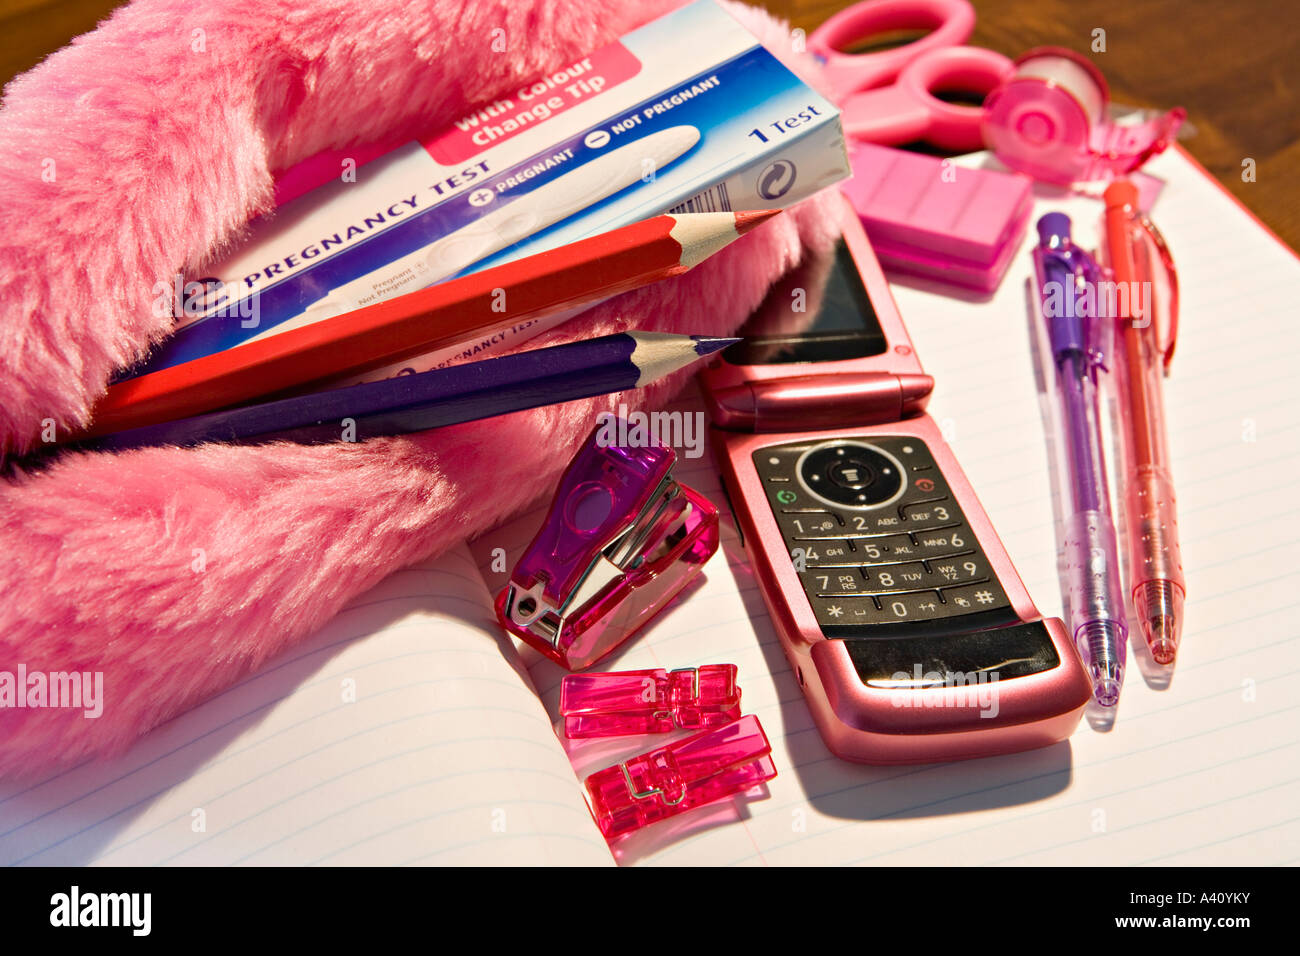 Pregnancy testing kit amongst contents of schoolgirl pencil case Stock Photo